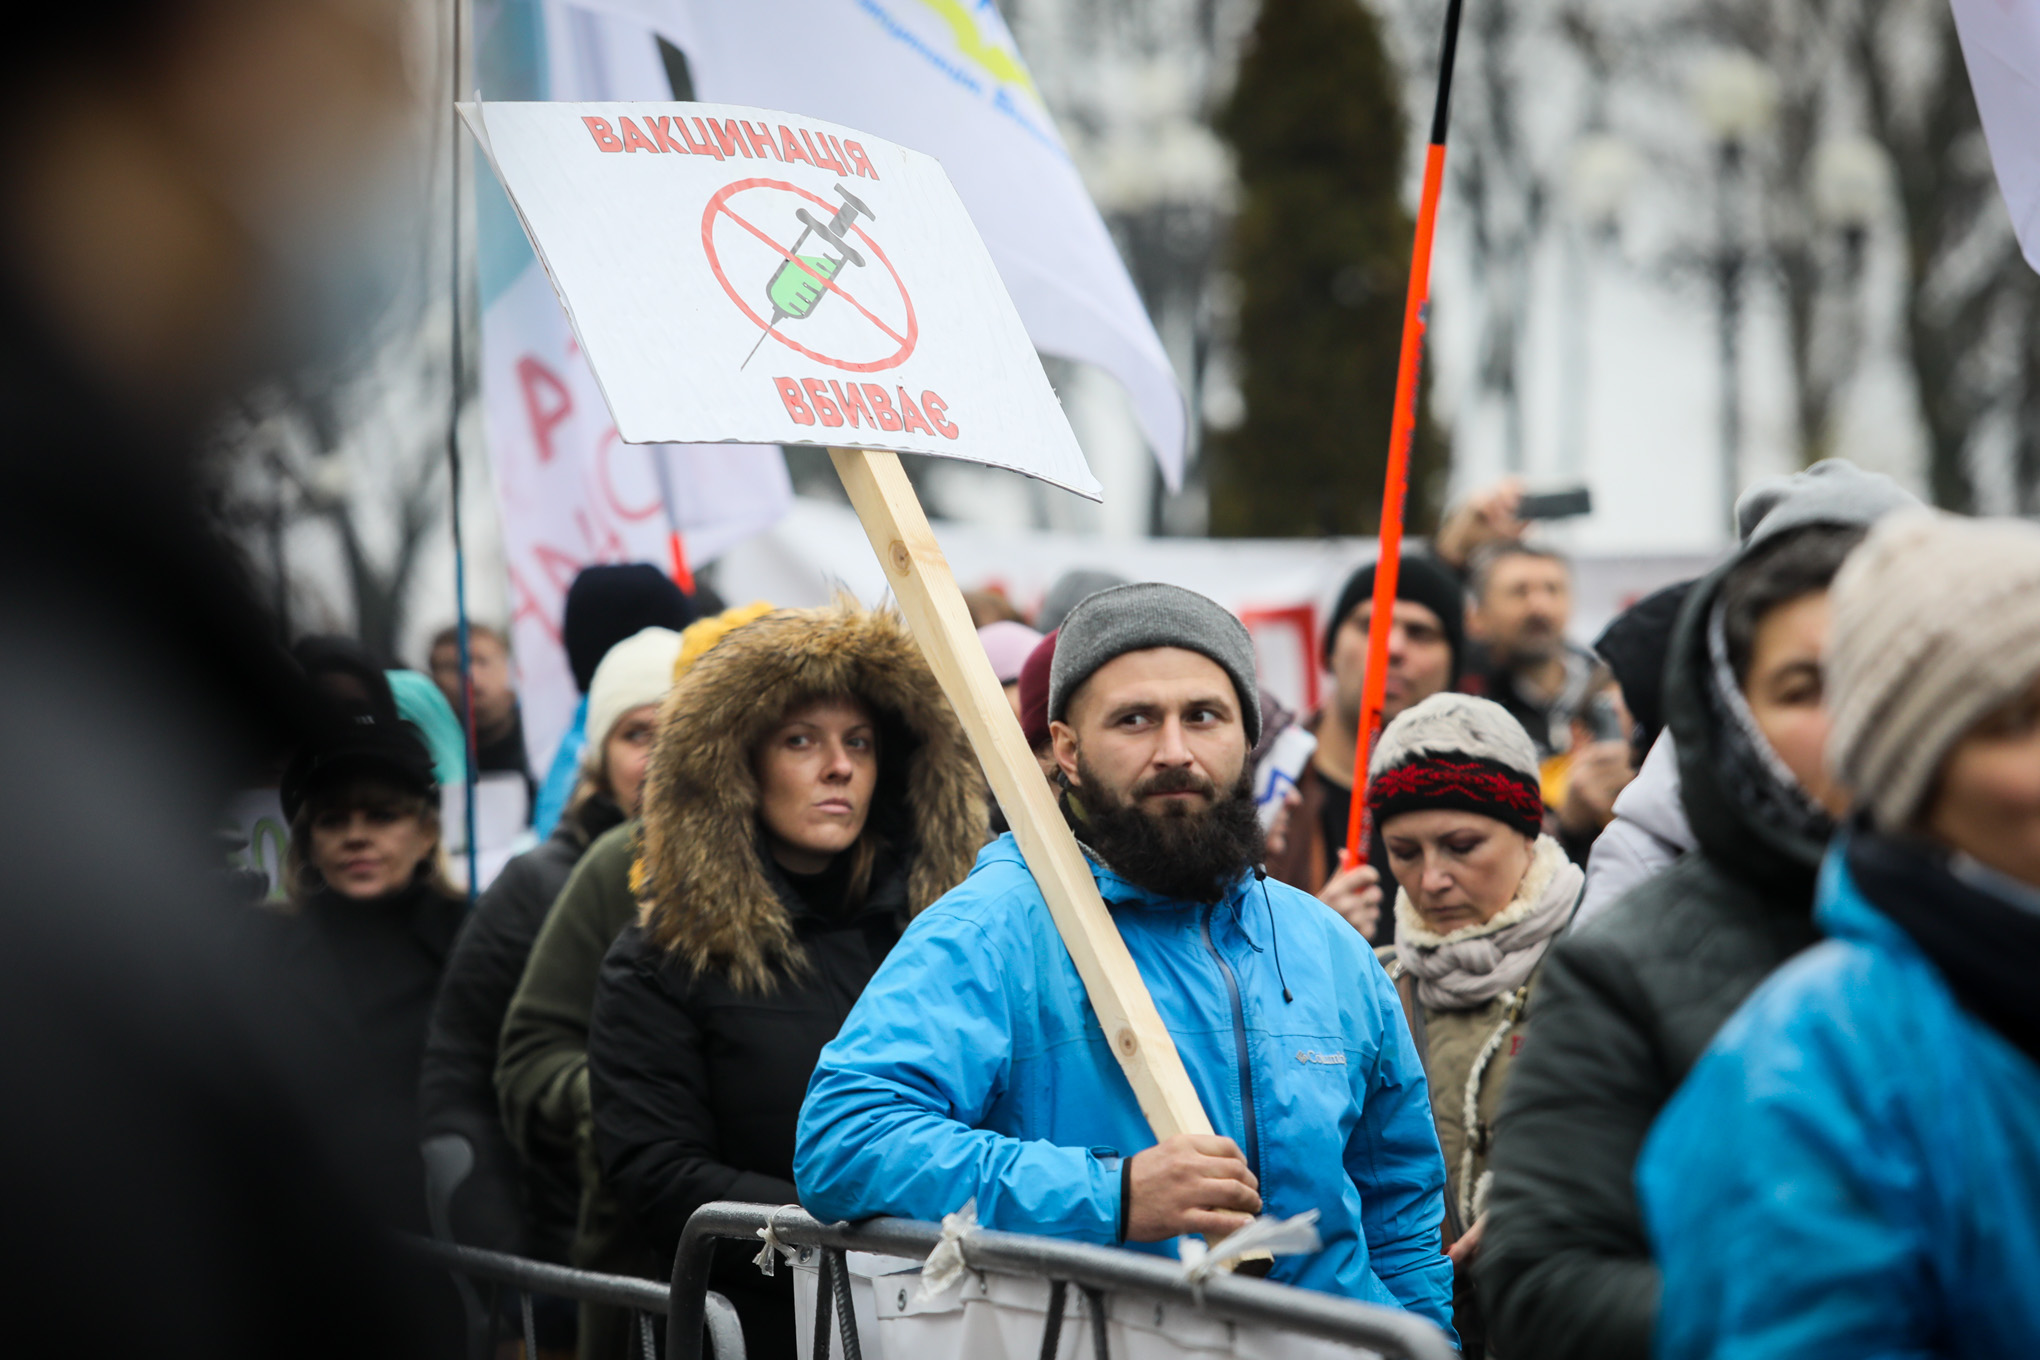 Europe remains closed to unvaccinated Ukrainians